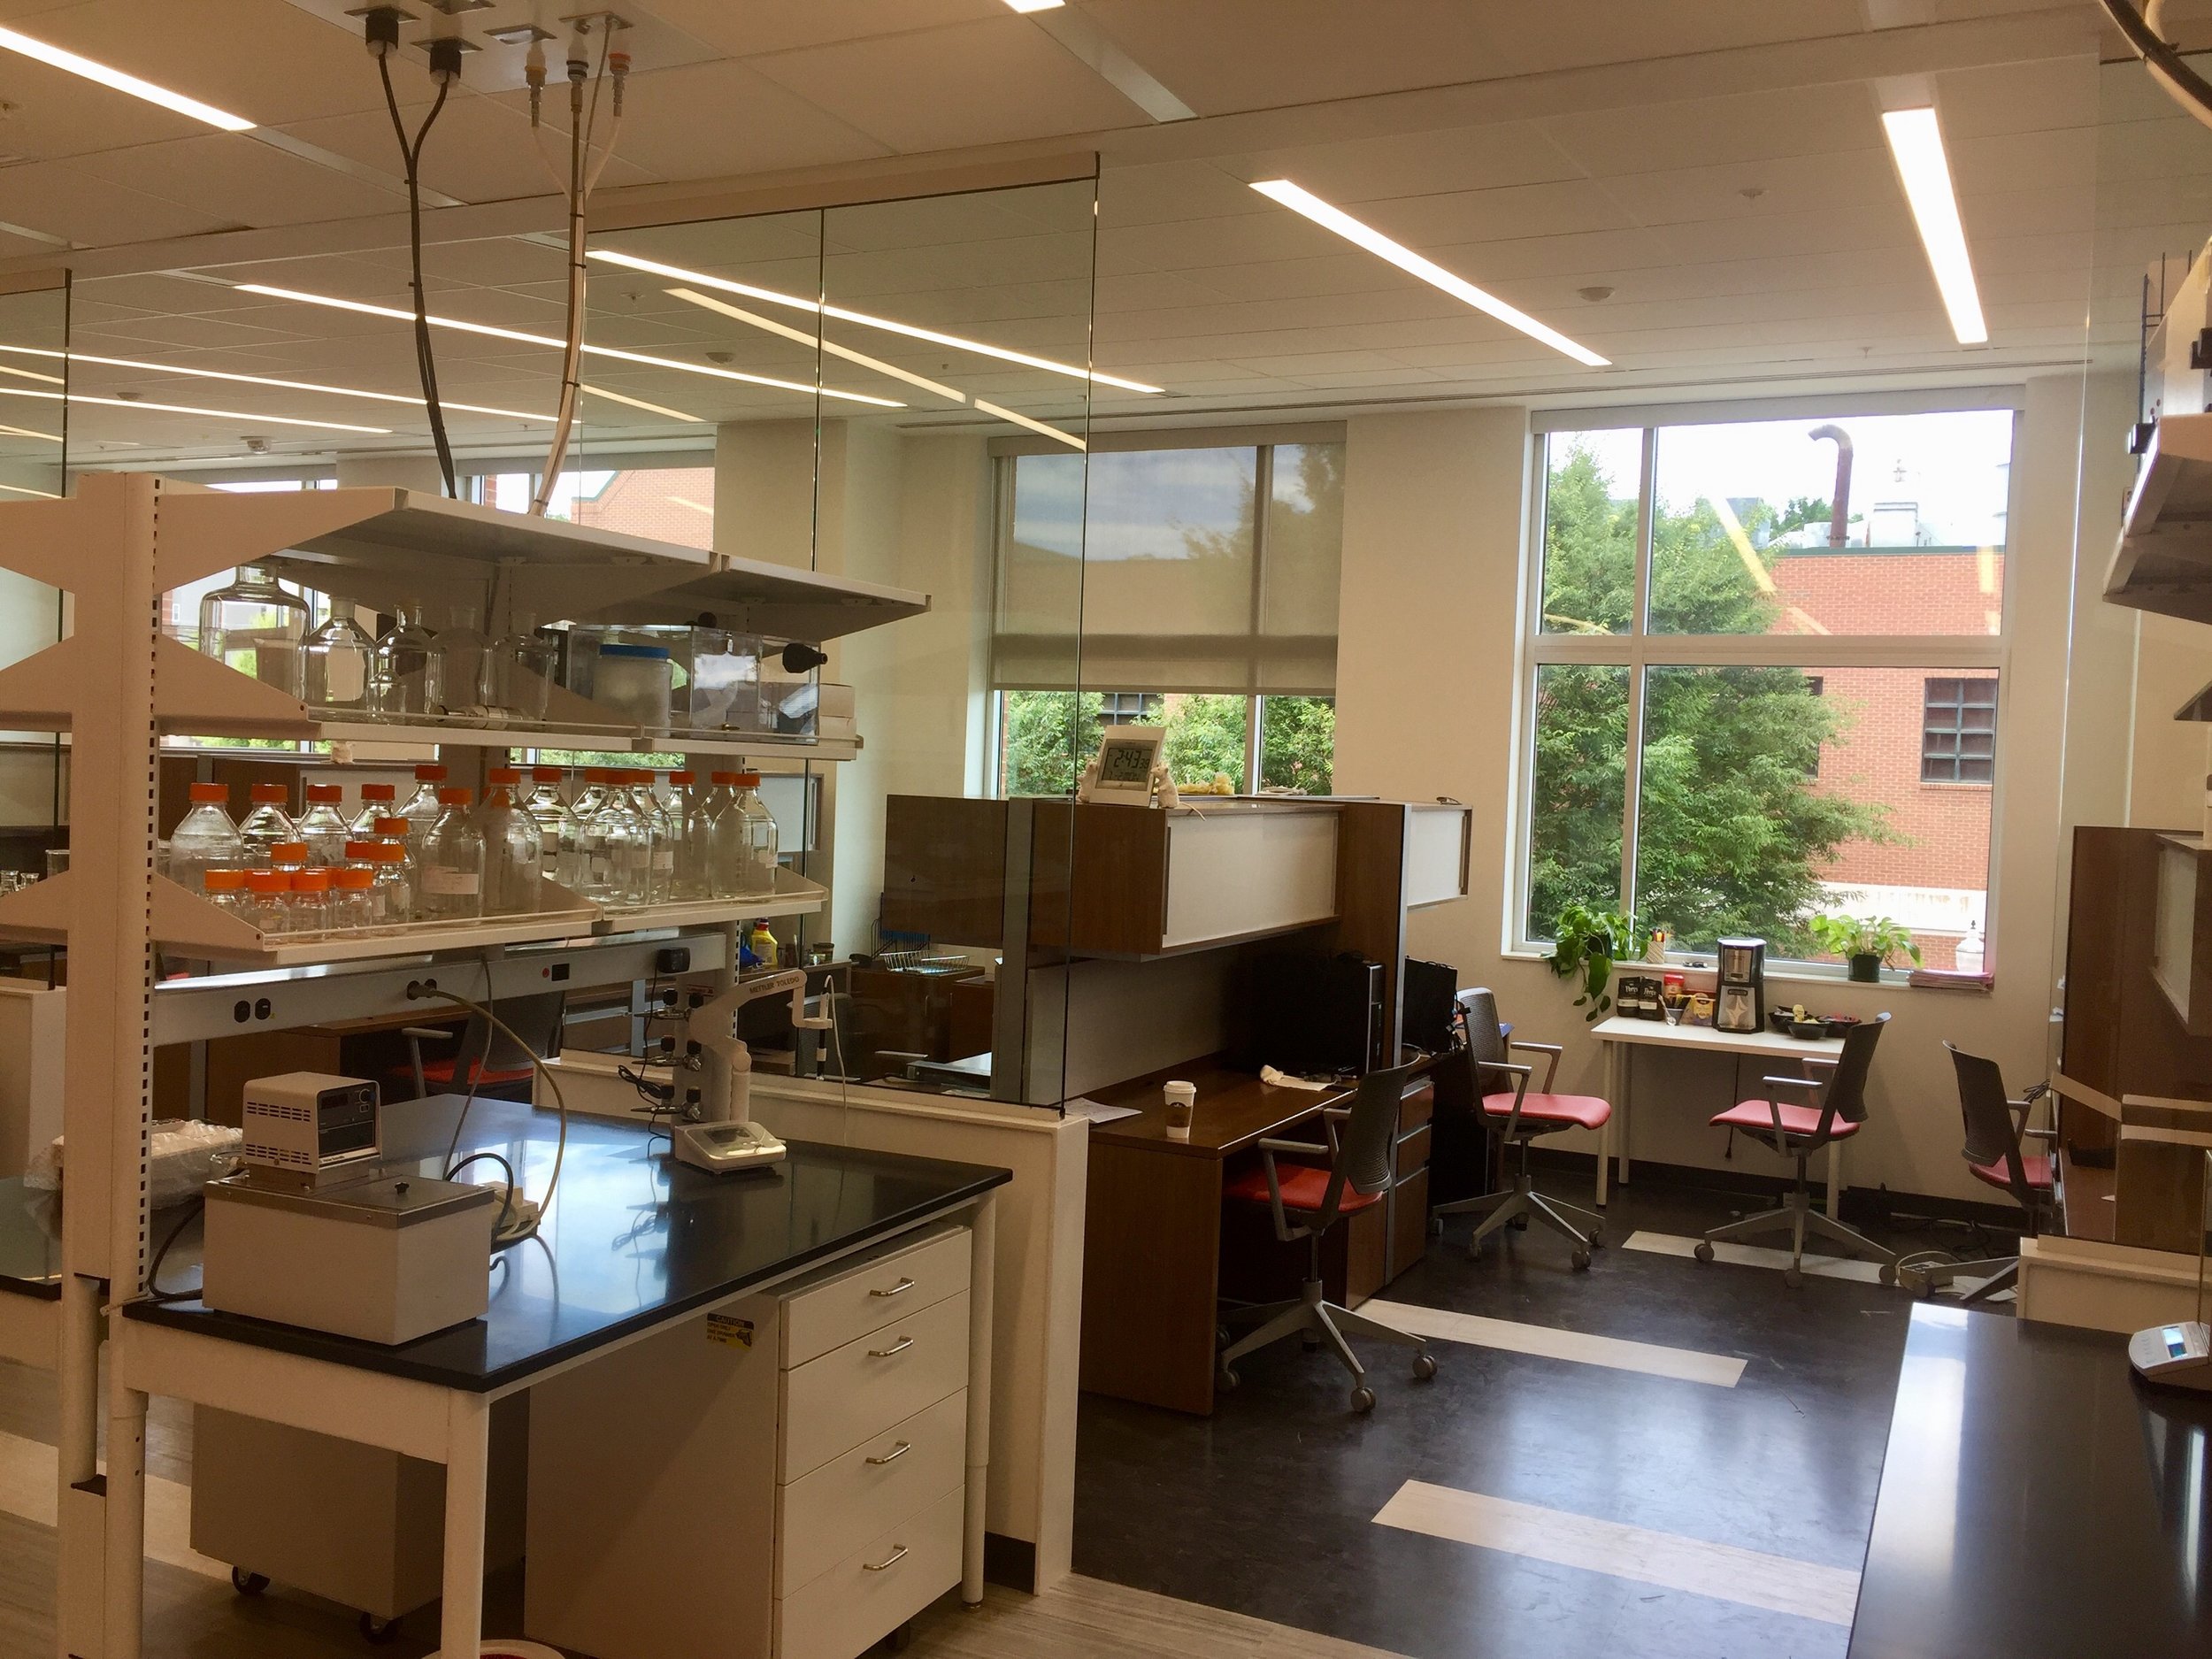 New lab in Mossman June 2018!